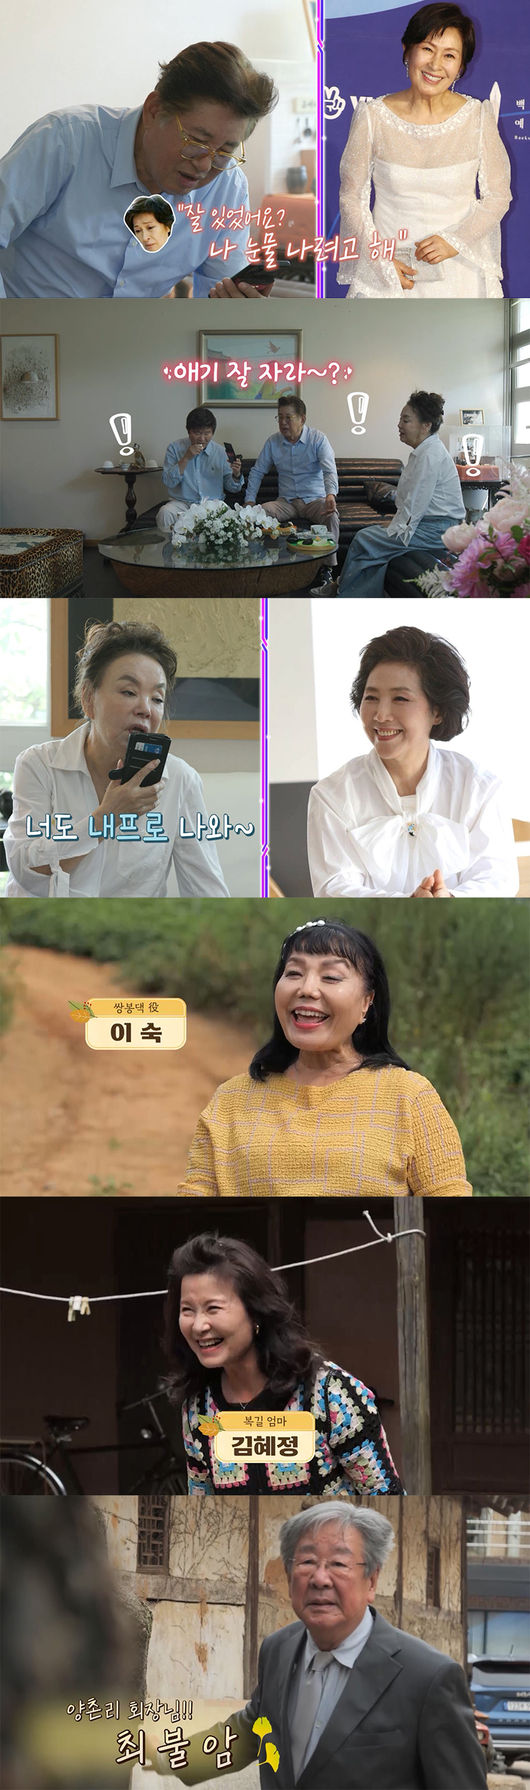 tvN STORY 제공